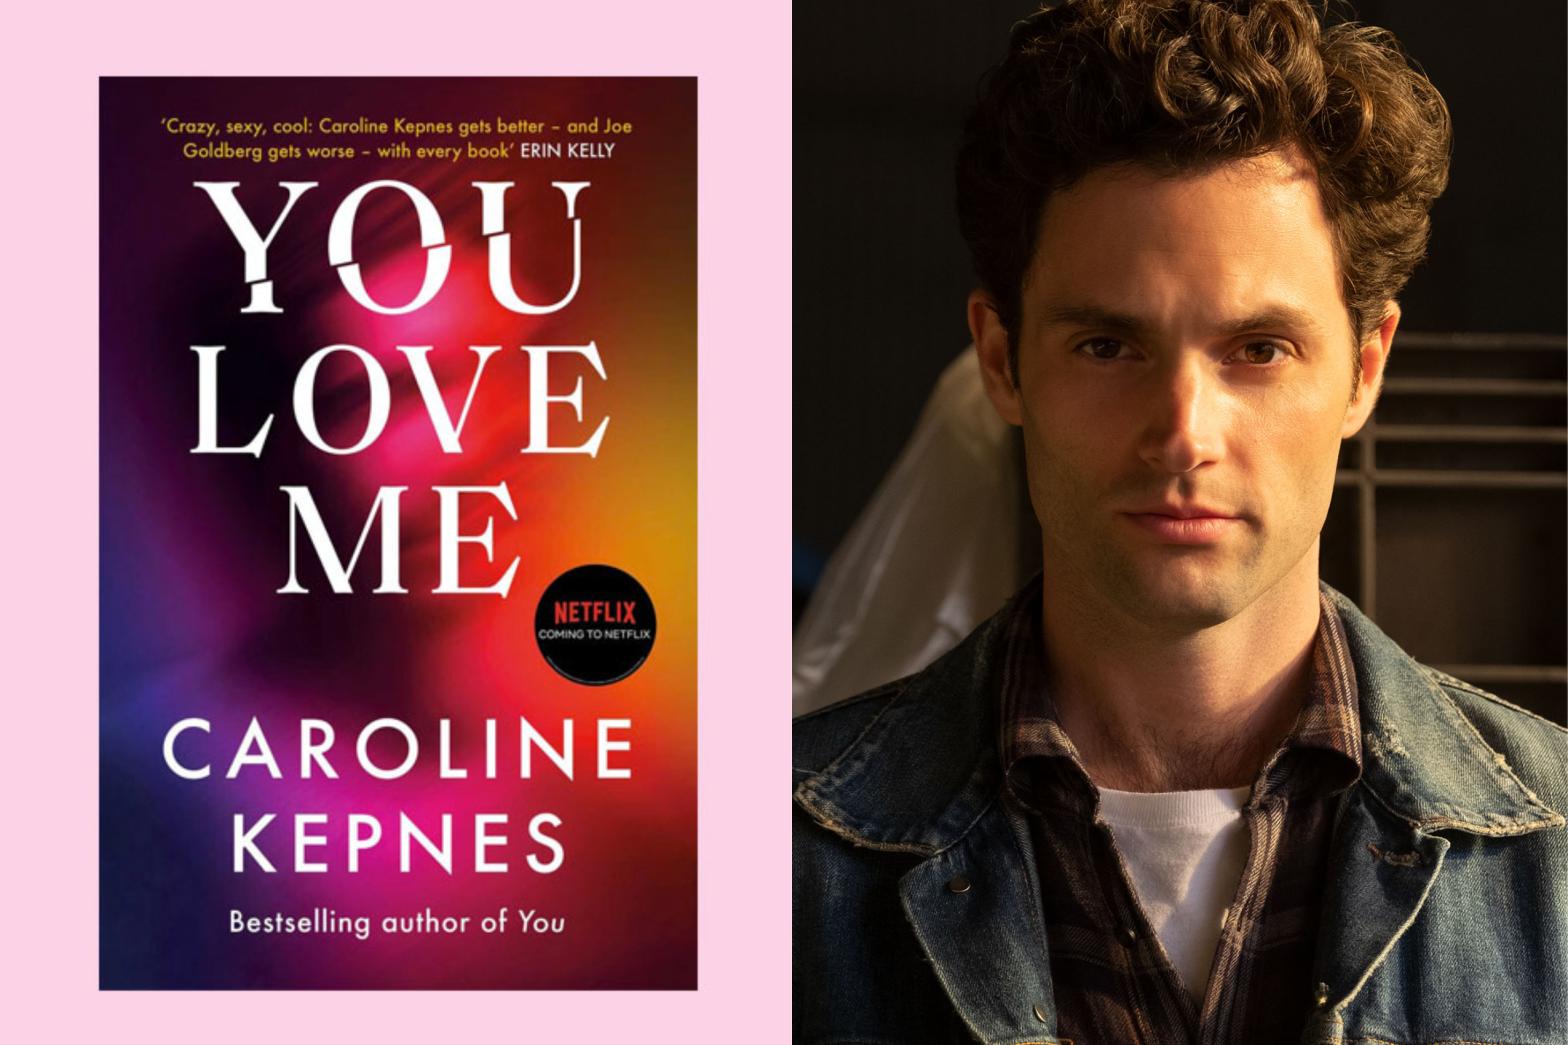 You Love Me by Caroline Kepnes